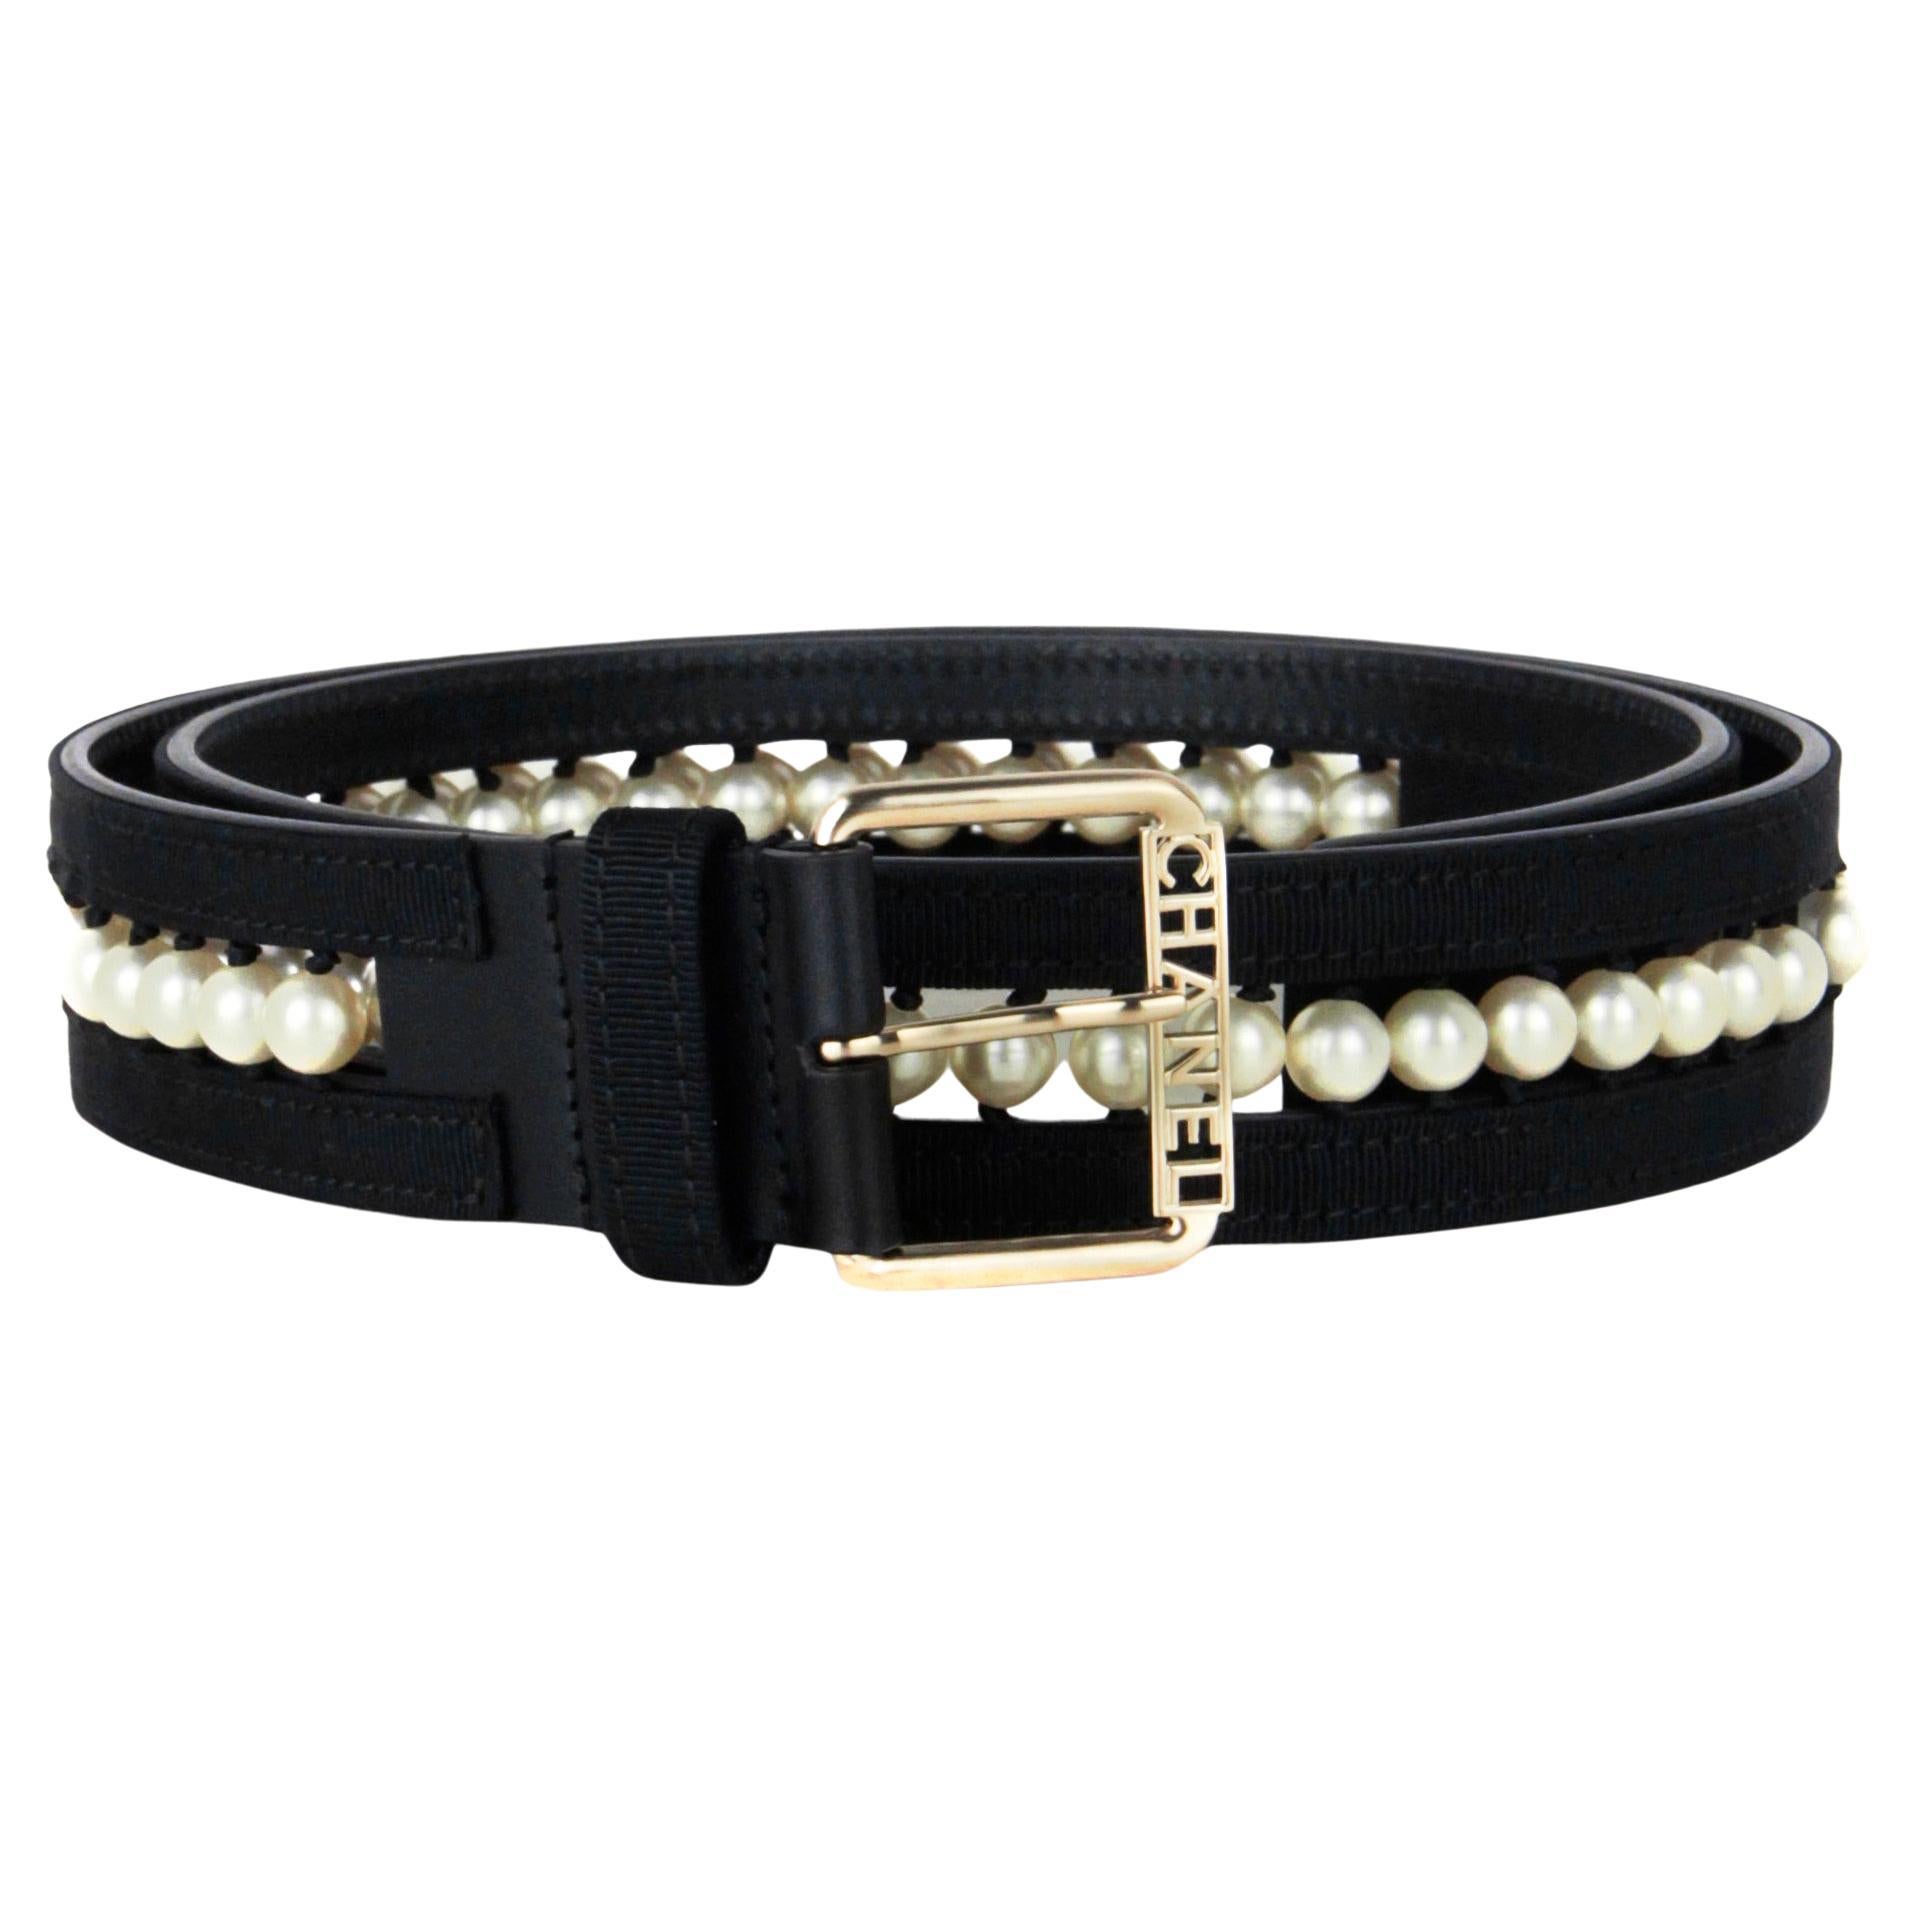 Chanel NWT Black Leather & Grosgrain Pearl Belt sz 90 rt. $1, 850